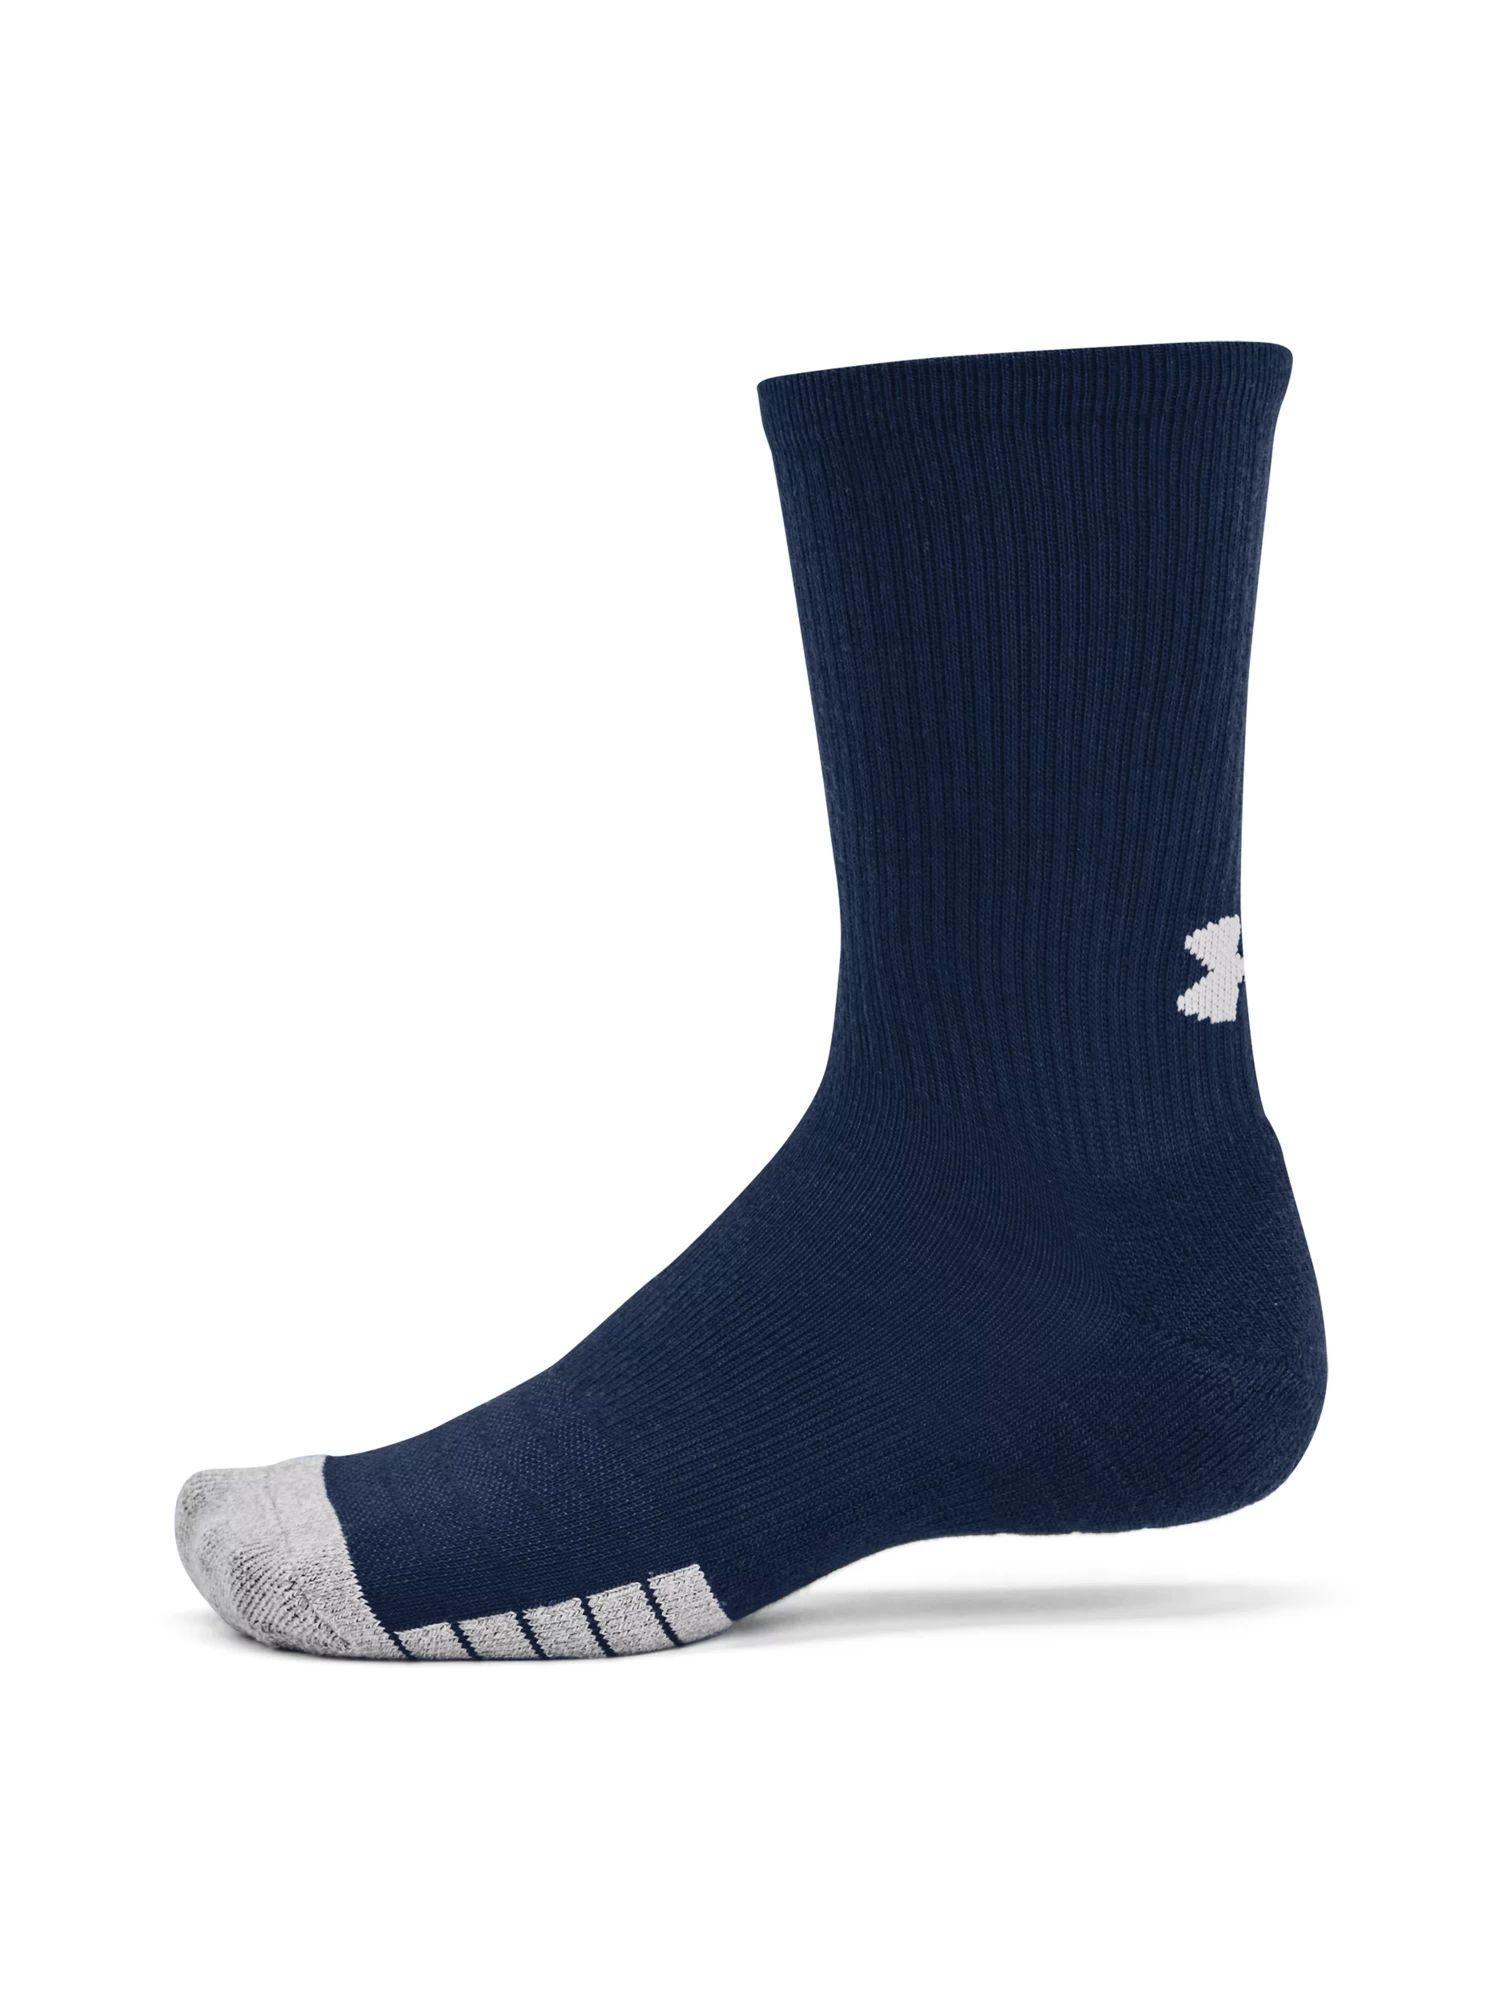 unisex heat gear crew socks - navy blue (pack of 3)